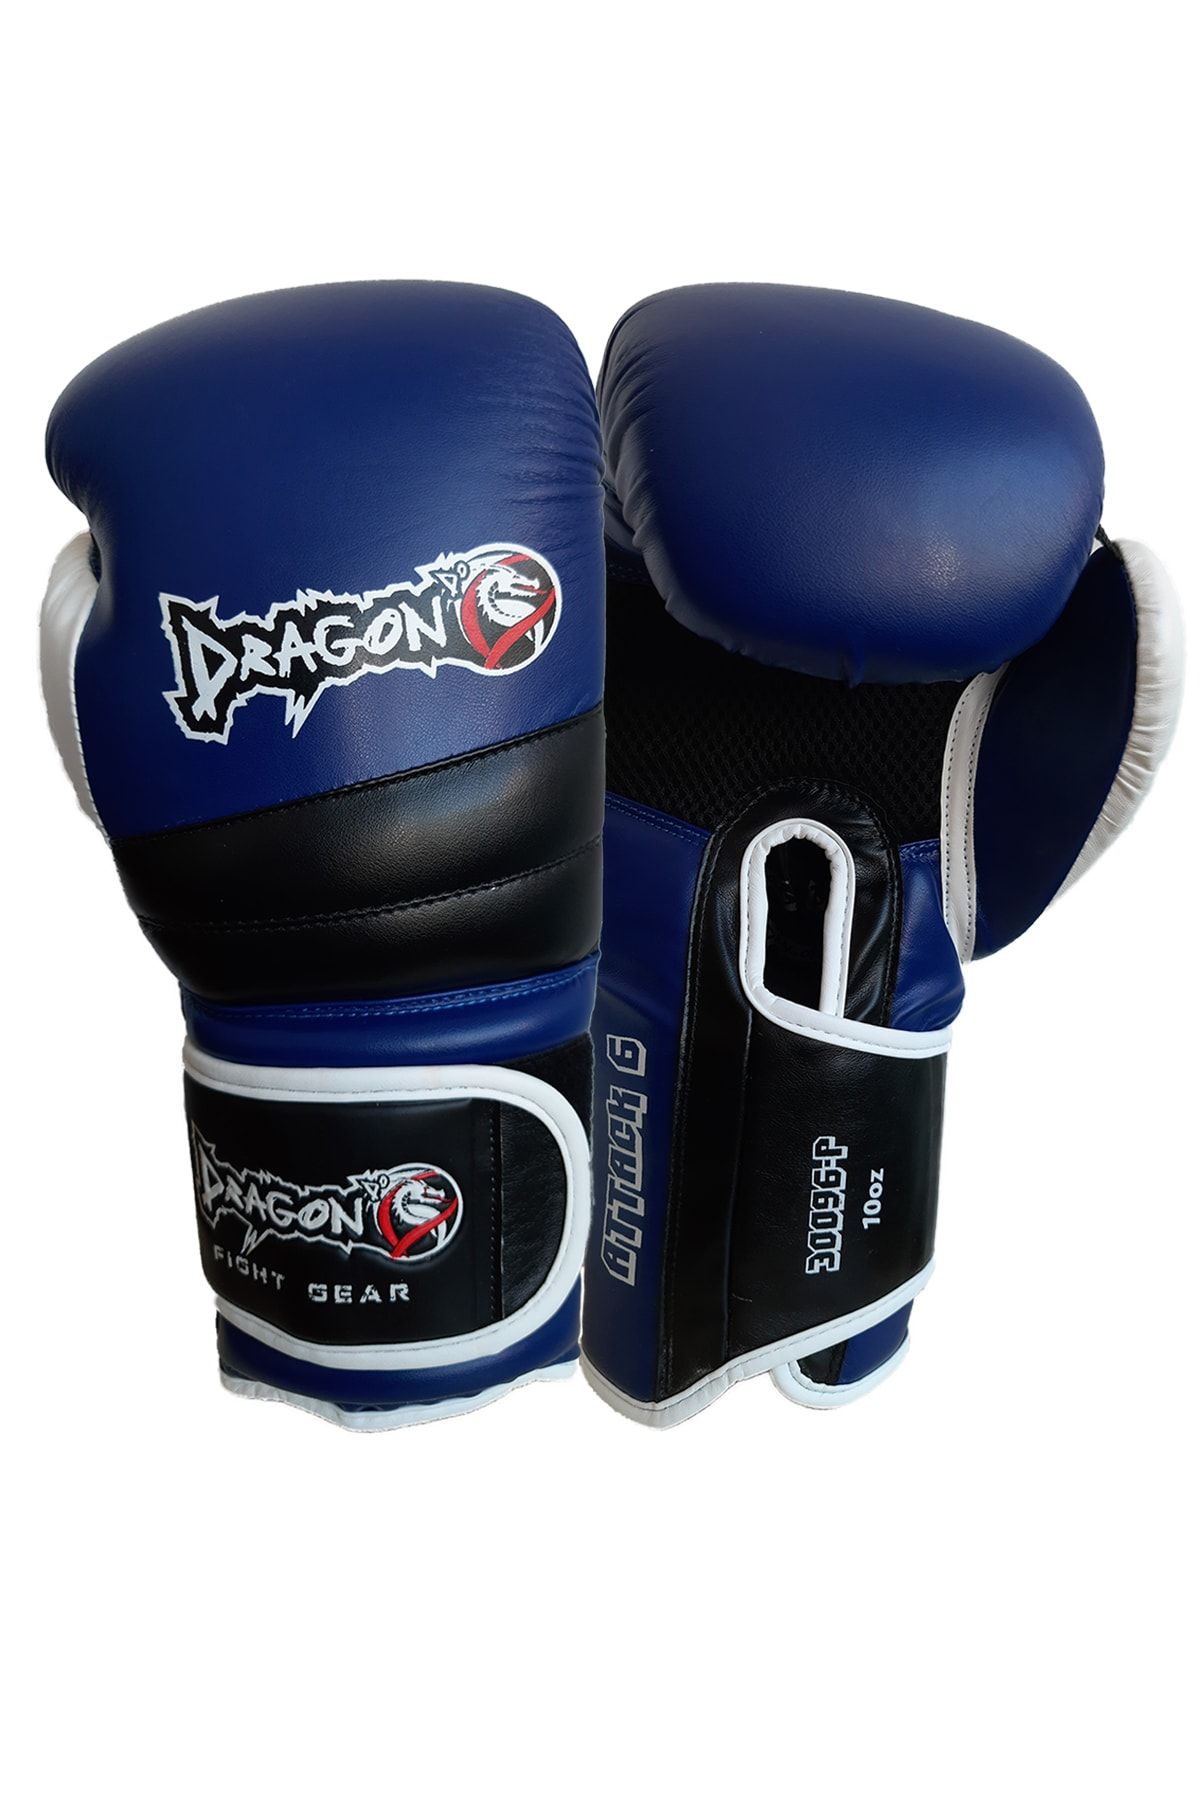 Dragondo Boks Kick Boks Muay Thai Eldiveni Attack 6 DragonDo boks eldiveni muay thai kick boks